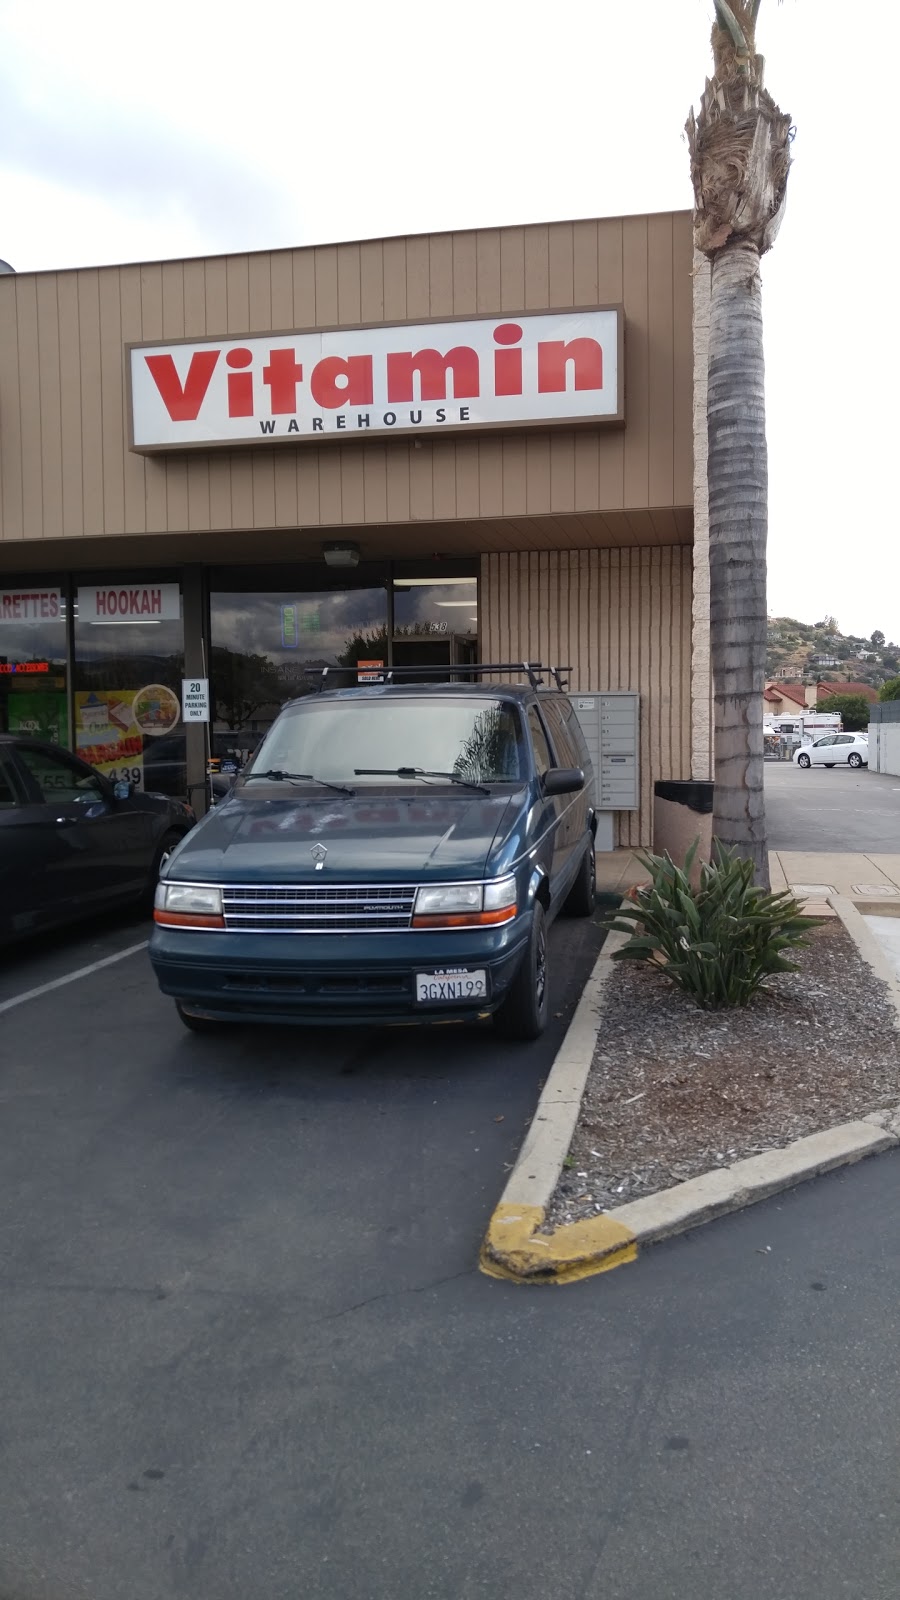 Vitamin Warehouse | Photo 2 of 2 | Address: 538 Jamacha Road, El Cajon, CA 92019, USA | Phone: (619) 579-8000